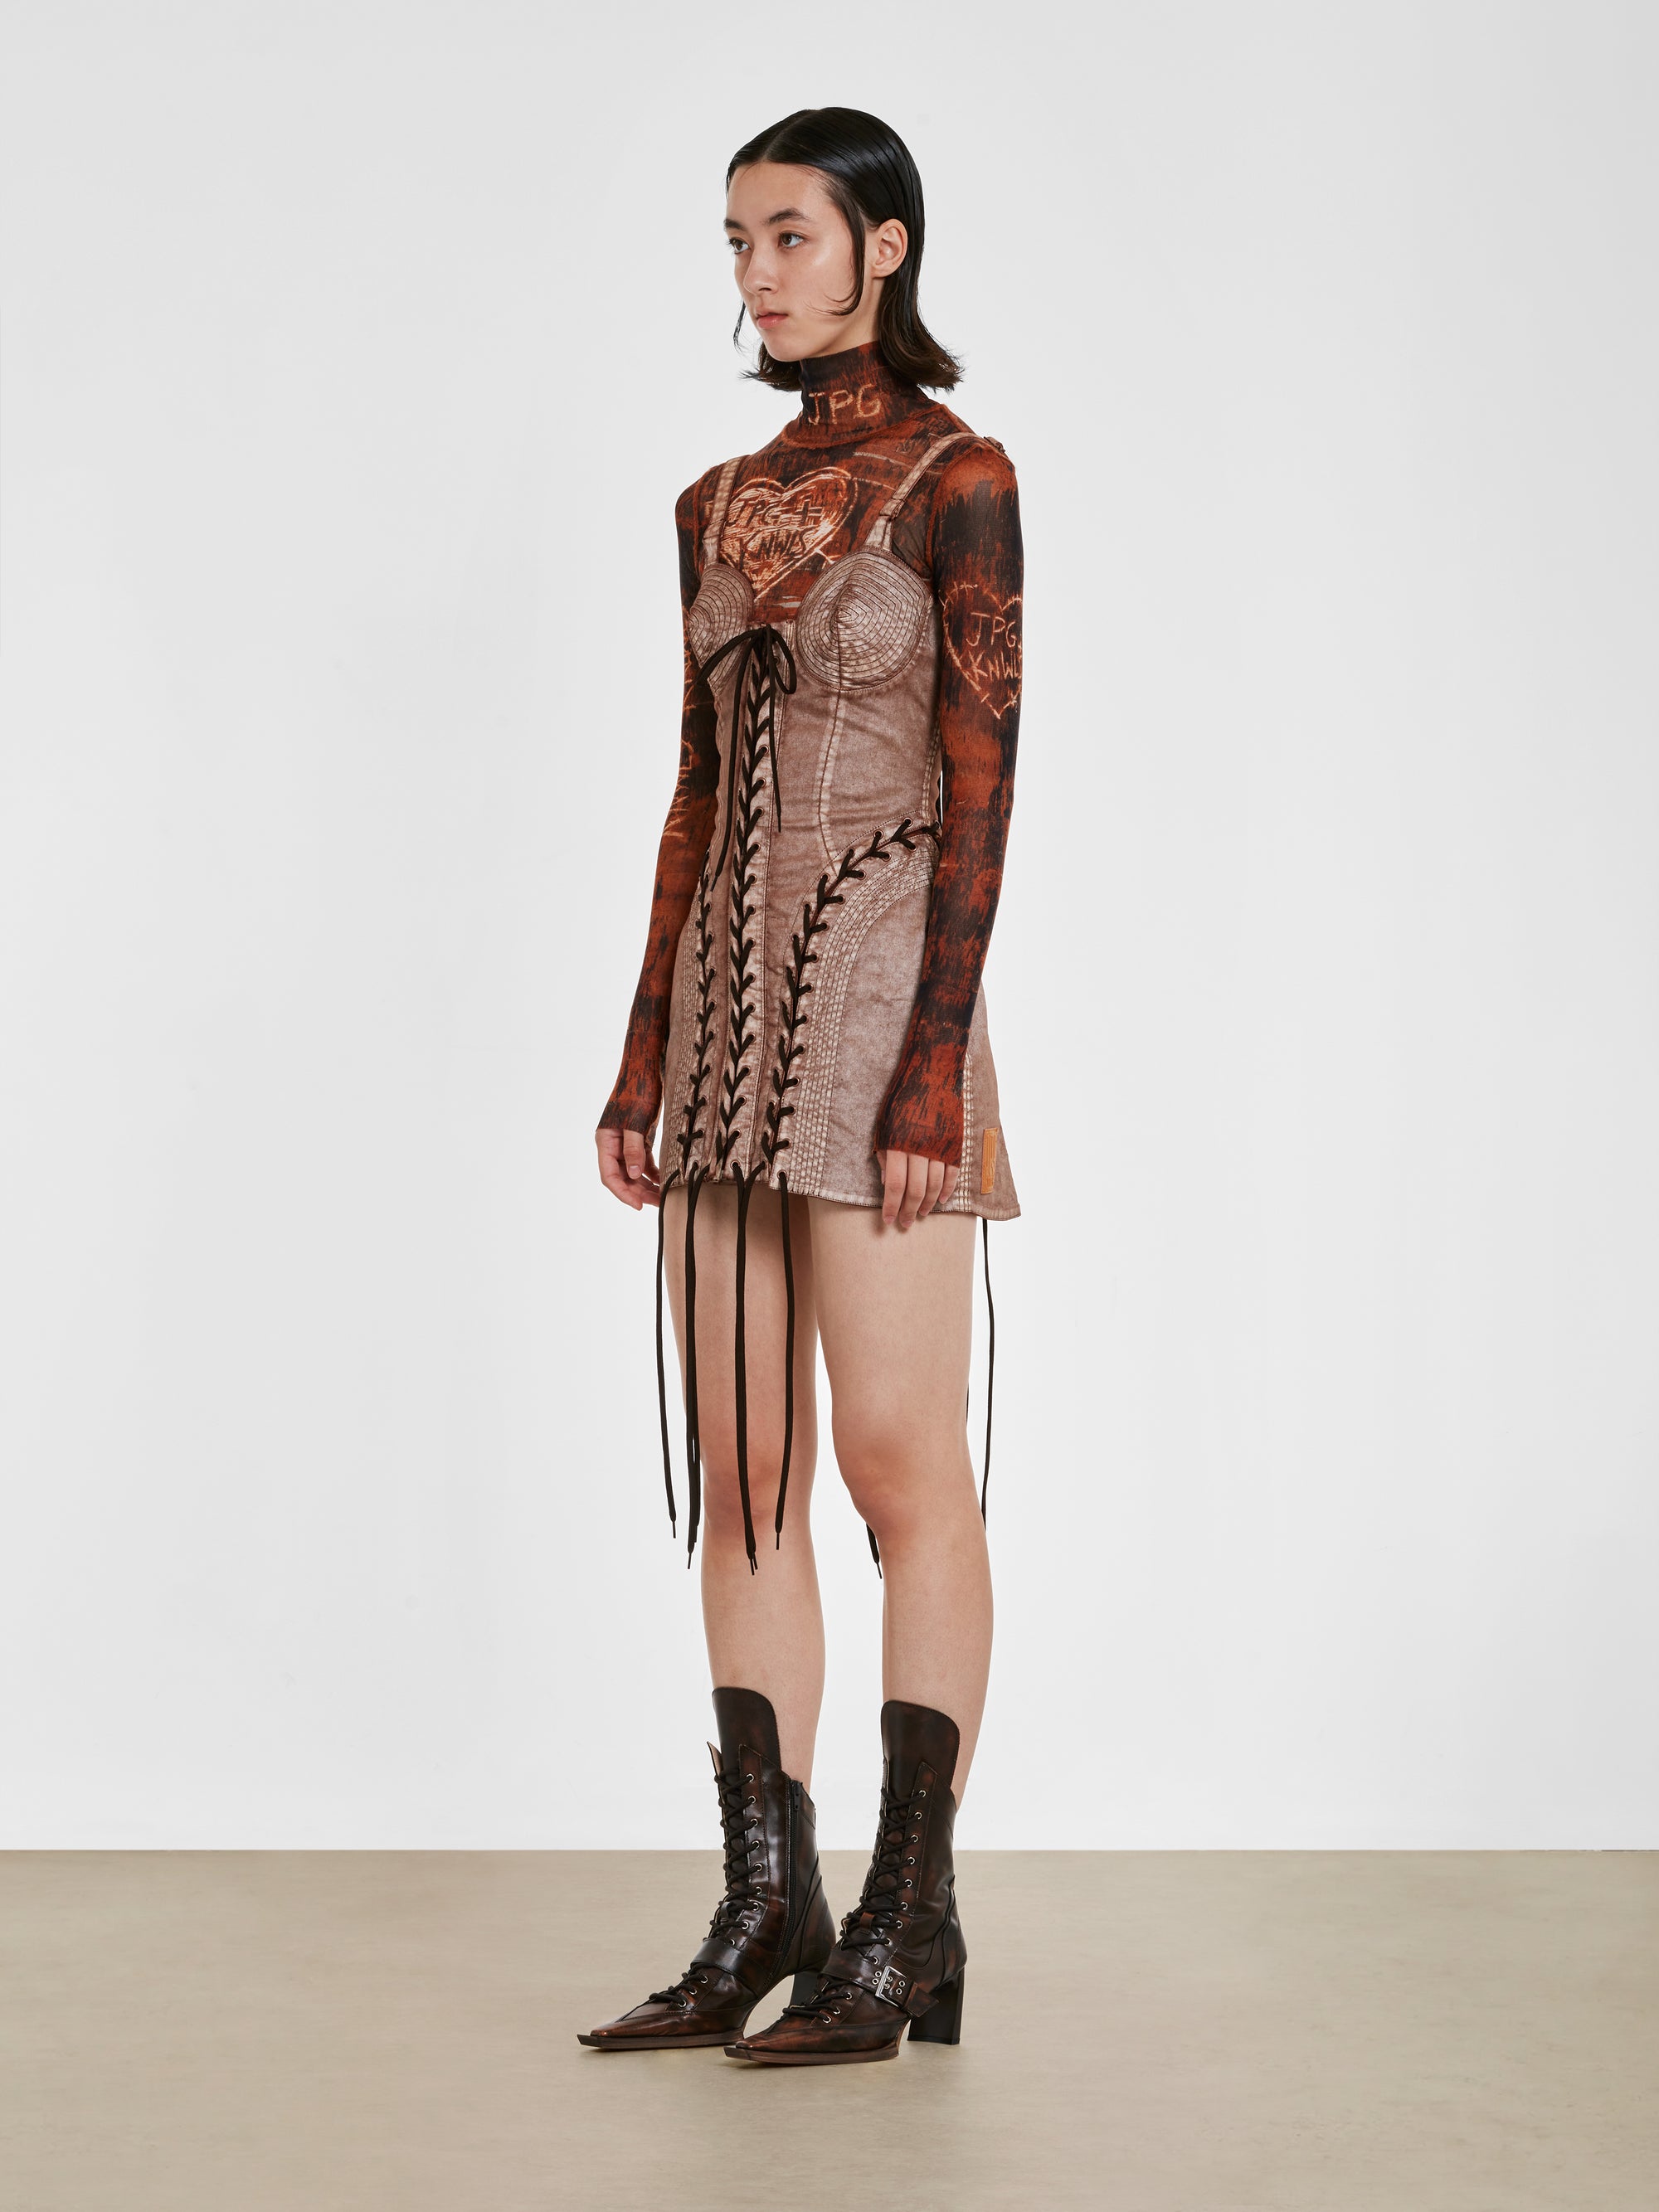 Jean Paul Gaultier - KNWLS Women’s Conical Laced Dress - (Brown/Ecru) view 2